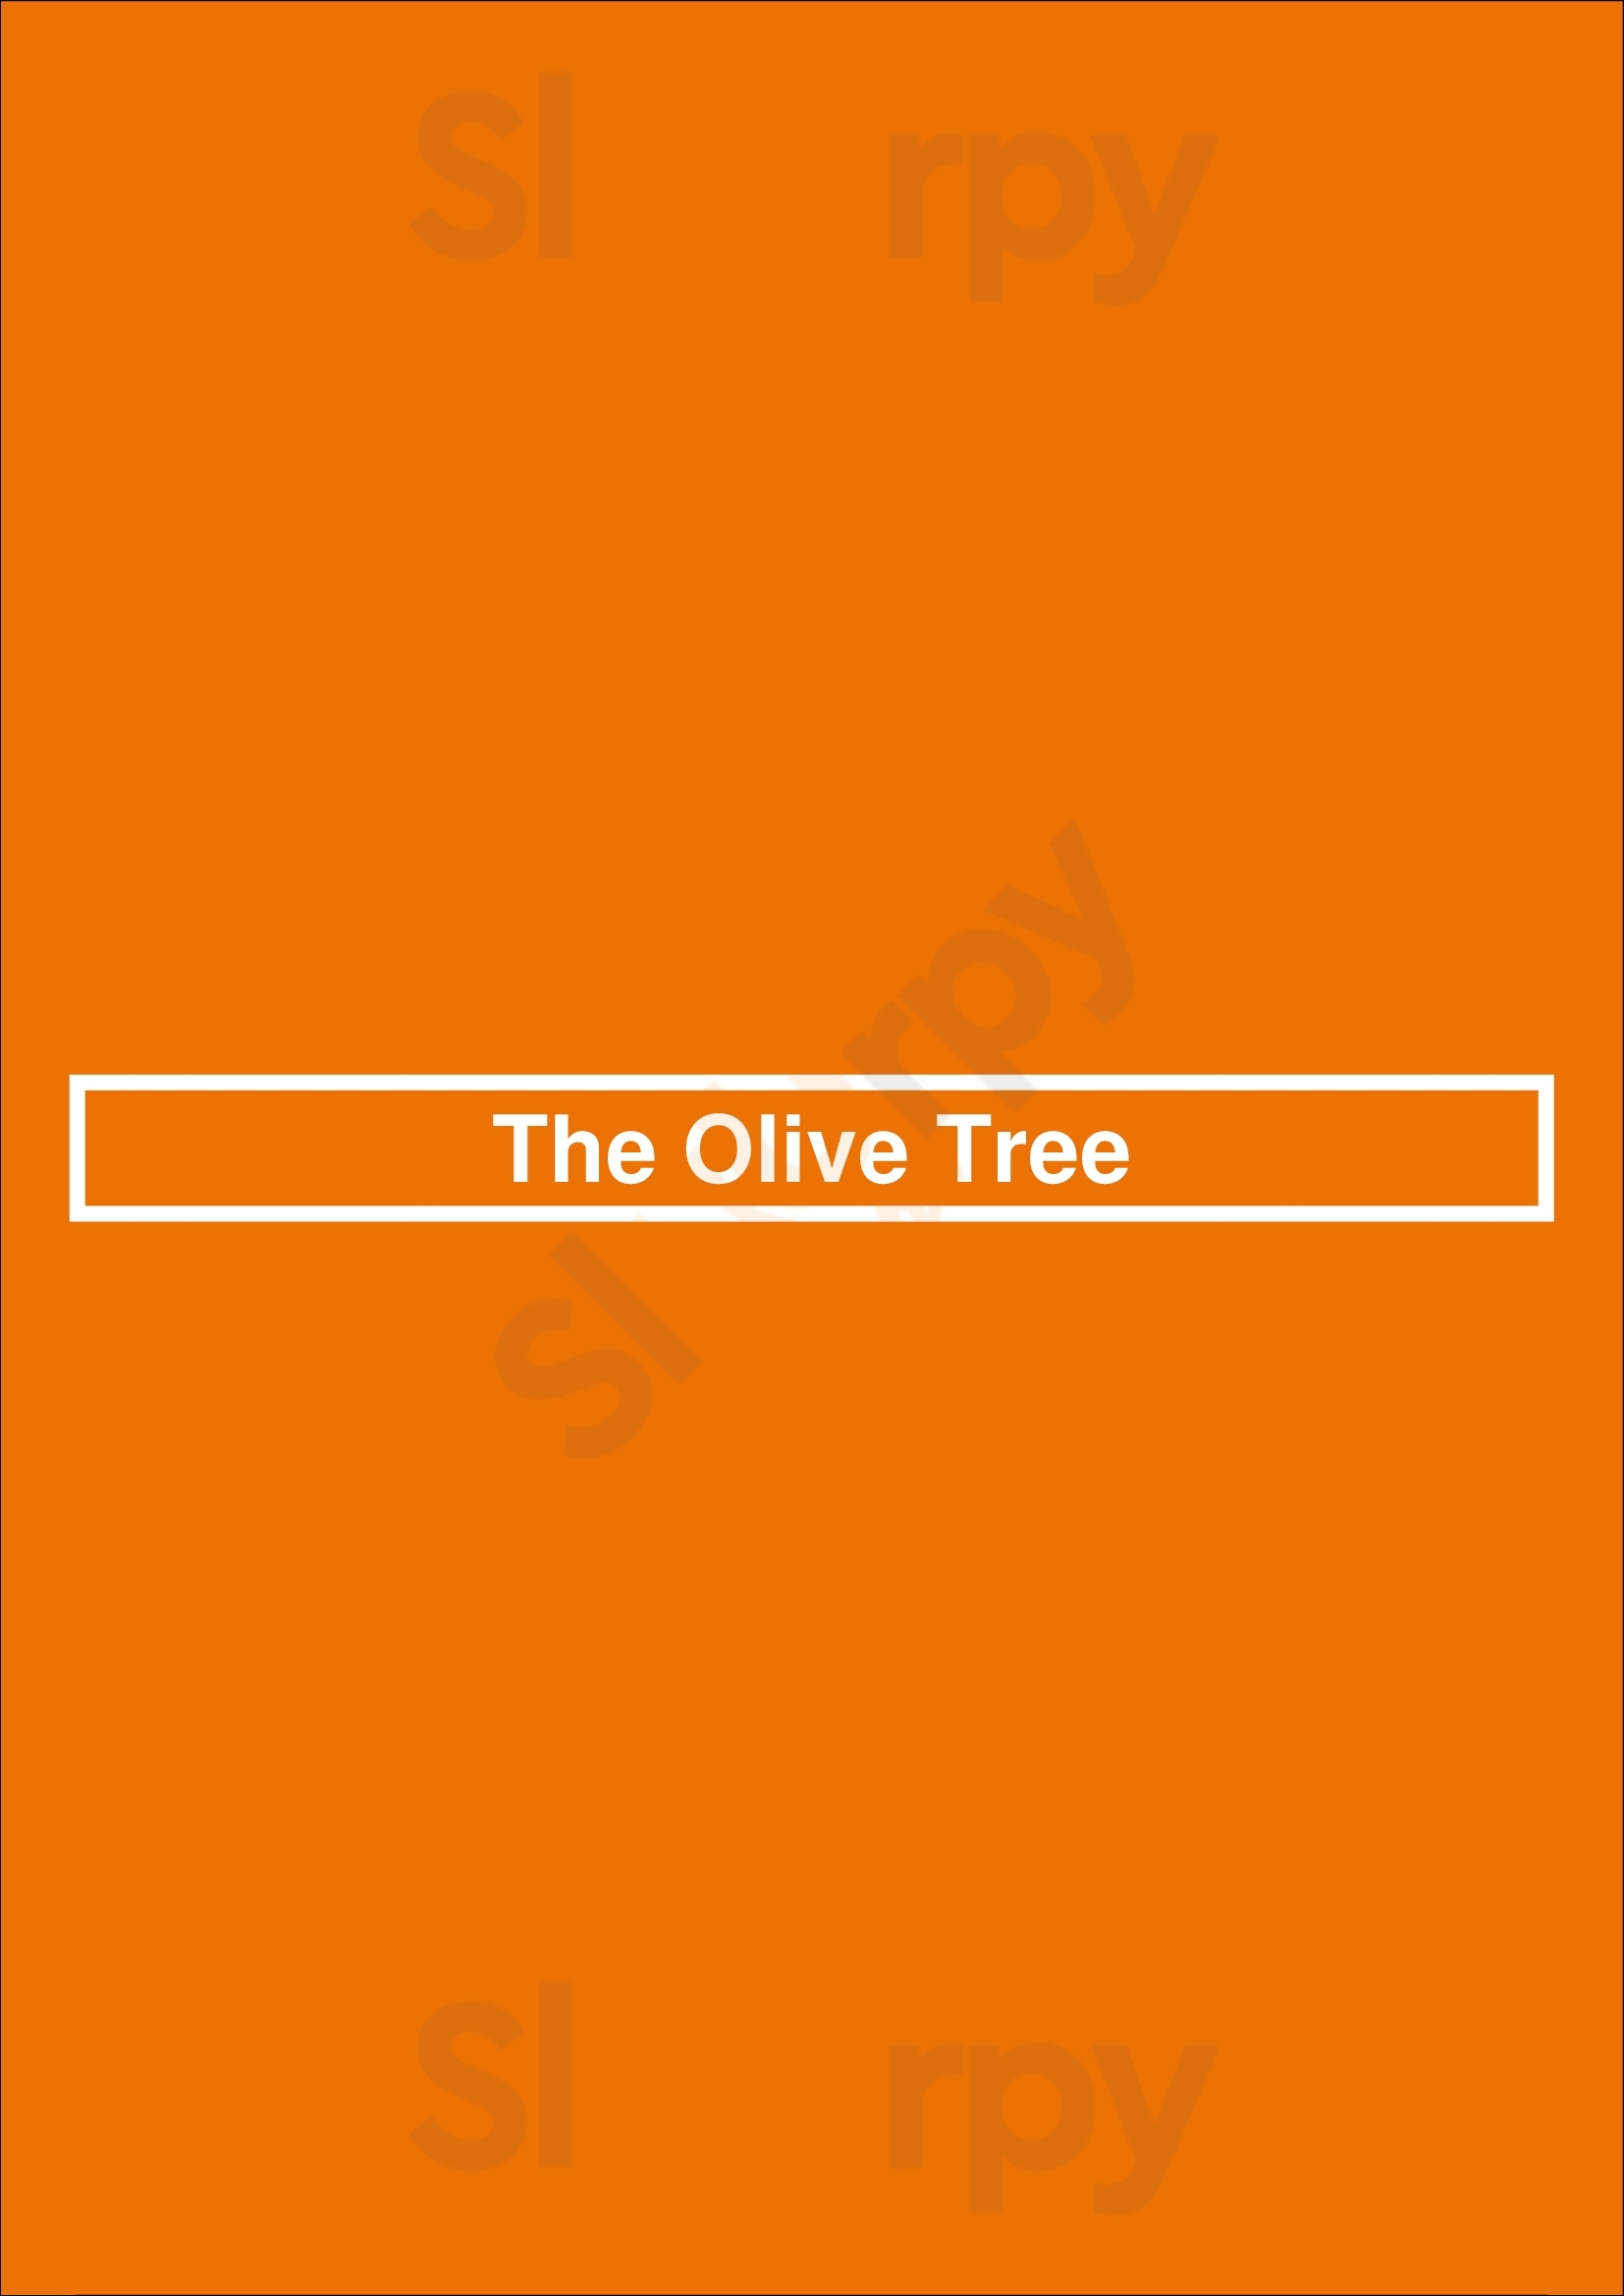 The Olive Tree Melbourne Menu - 1